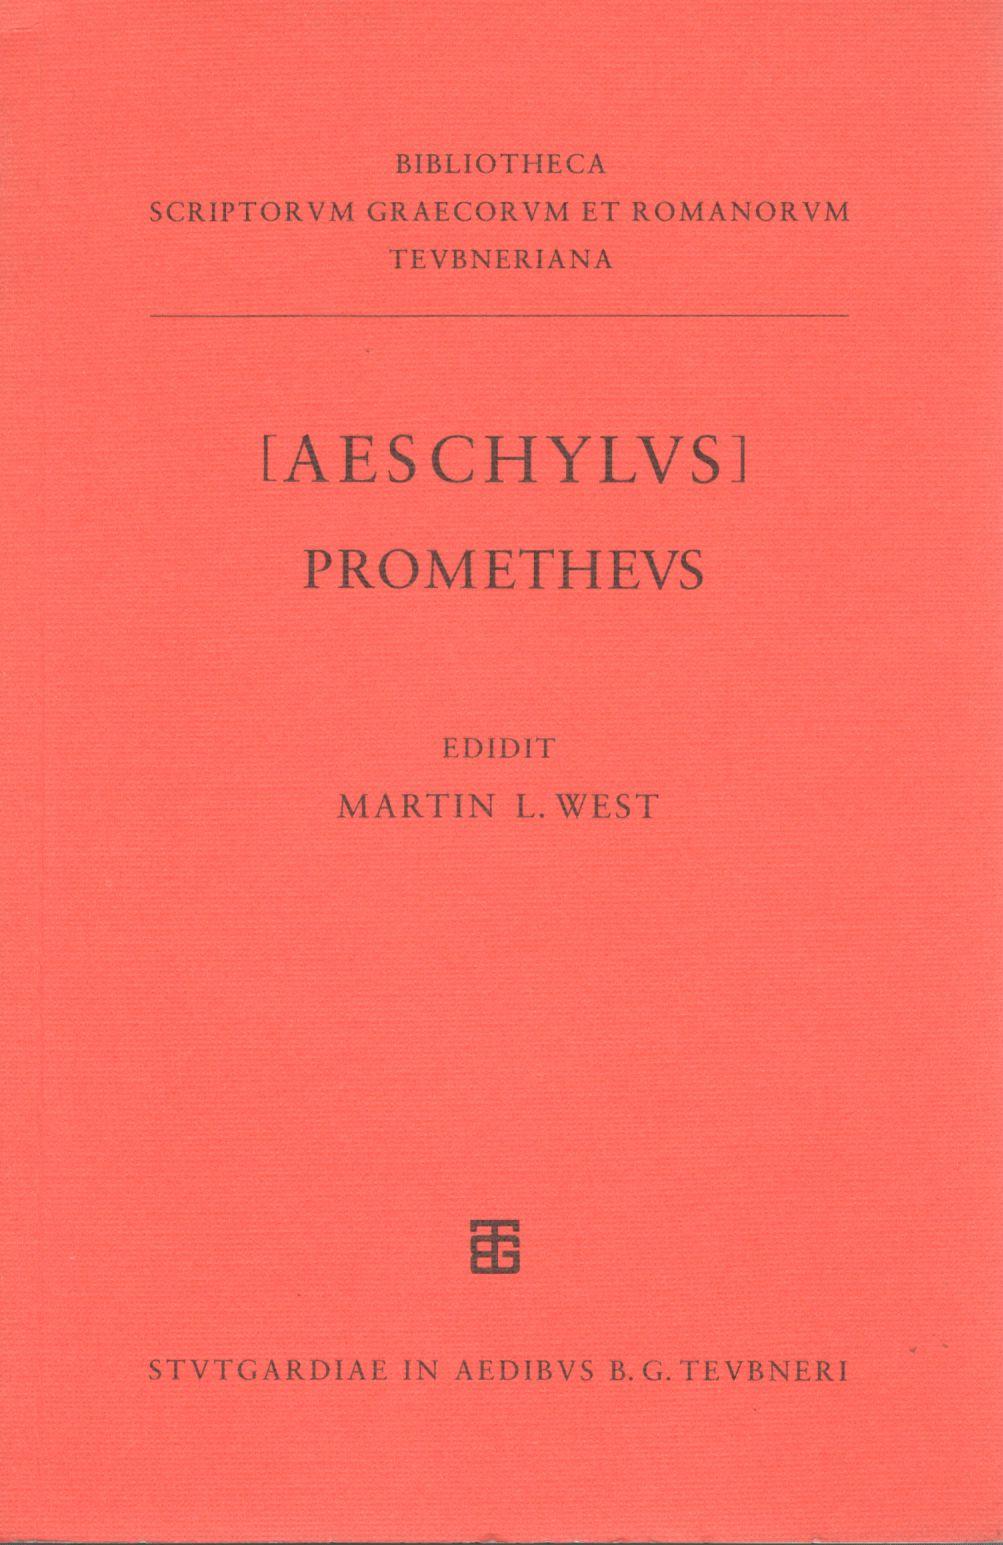 AESCHYLI PROMETHEUS